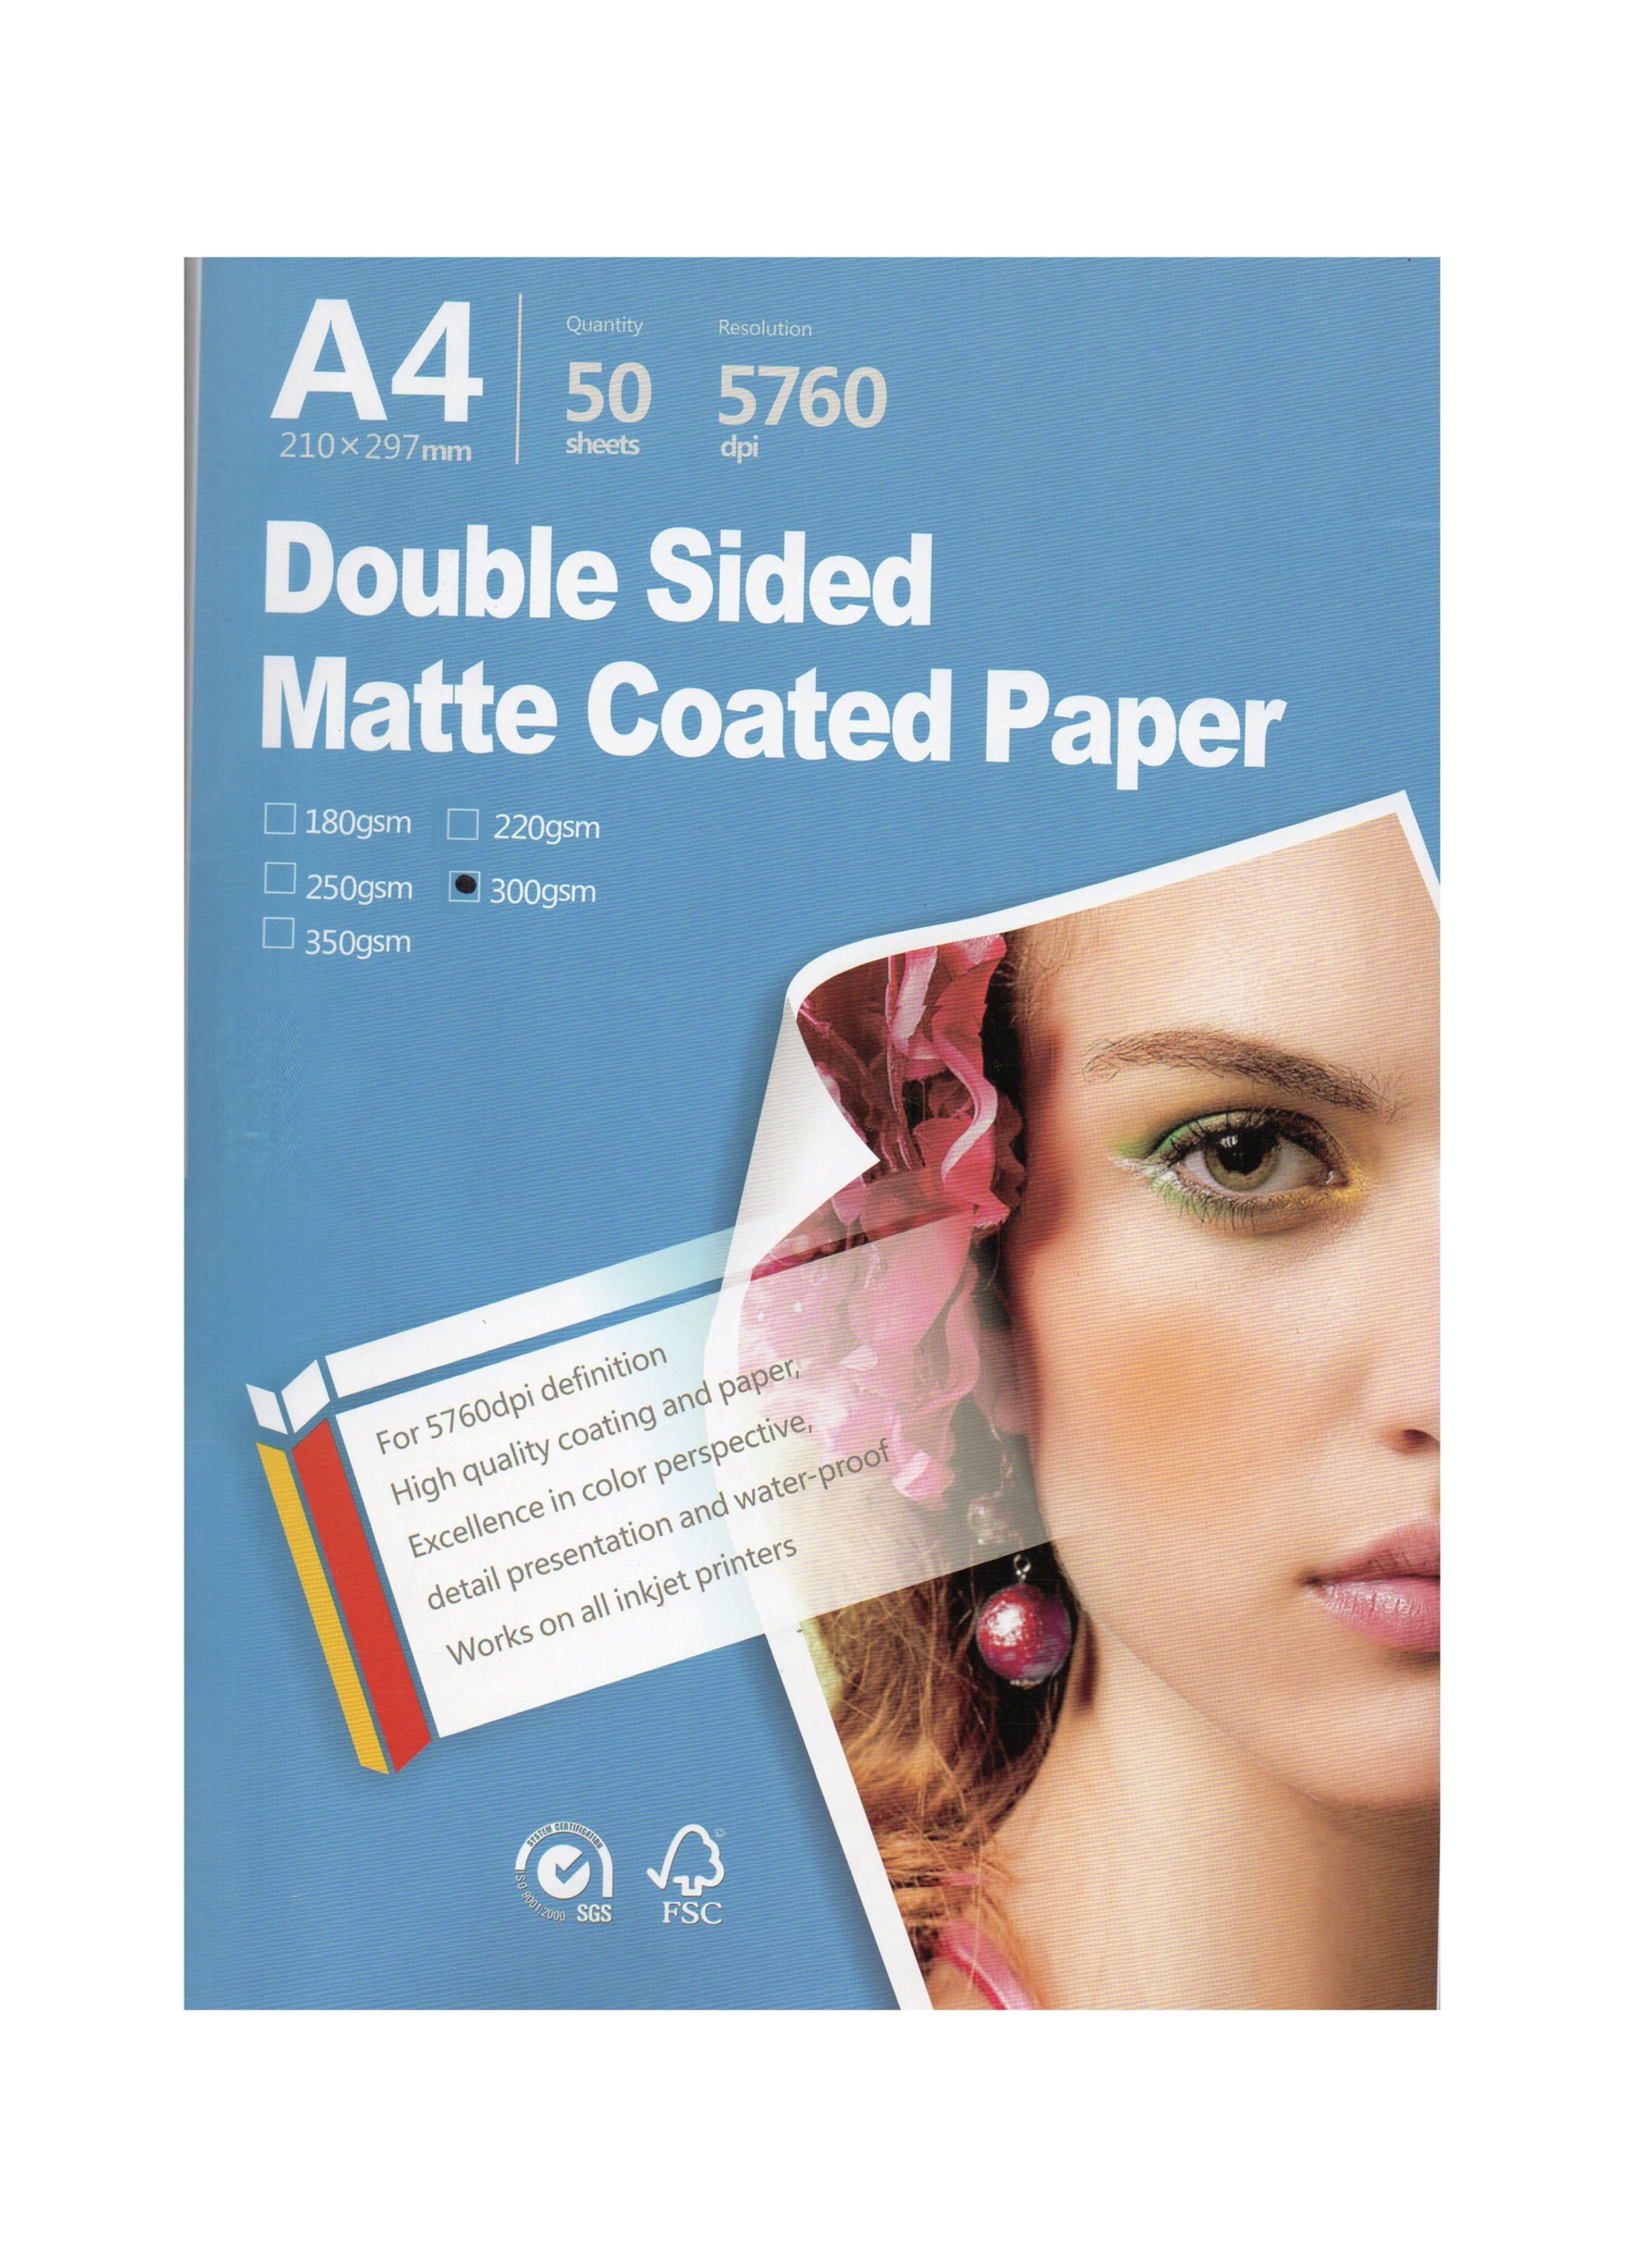 140g A4 100sheets Double-sided Inkjet Printing Paper Matte Inkjet